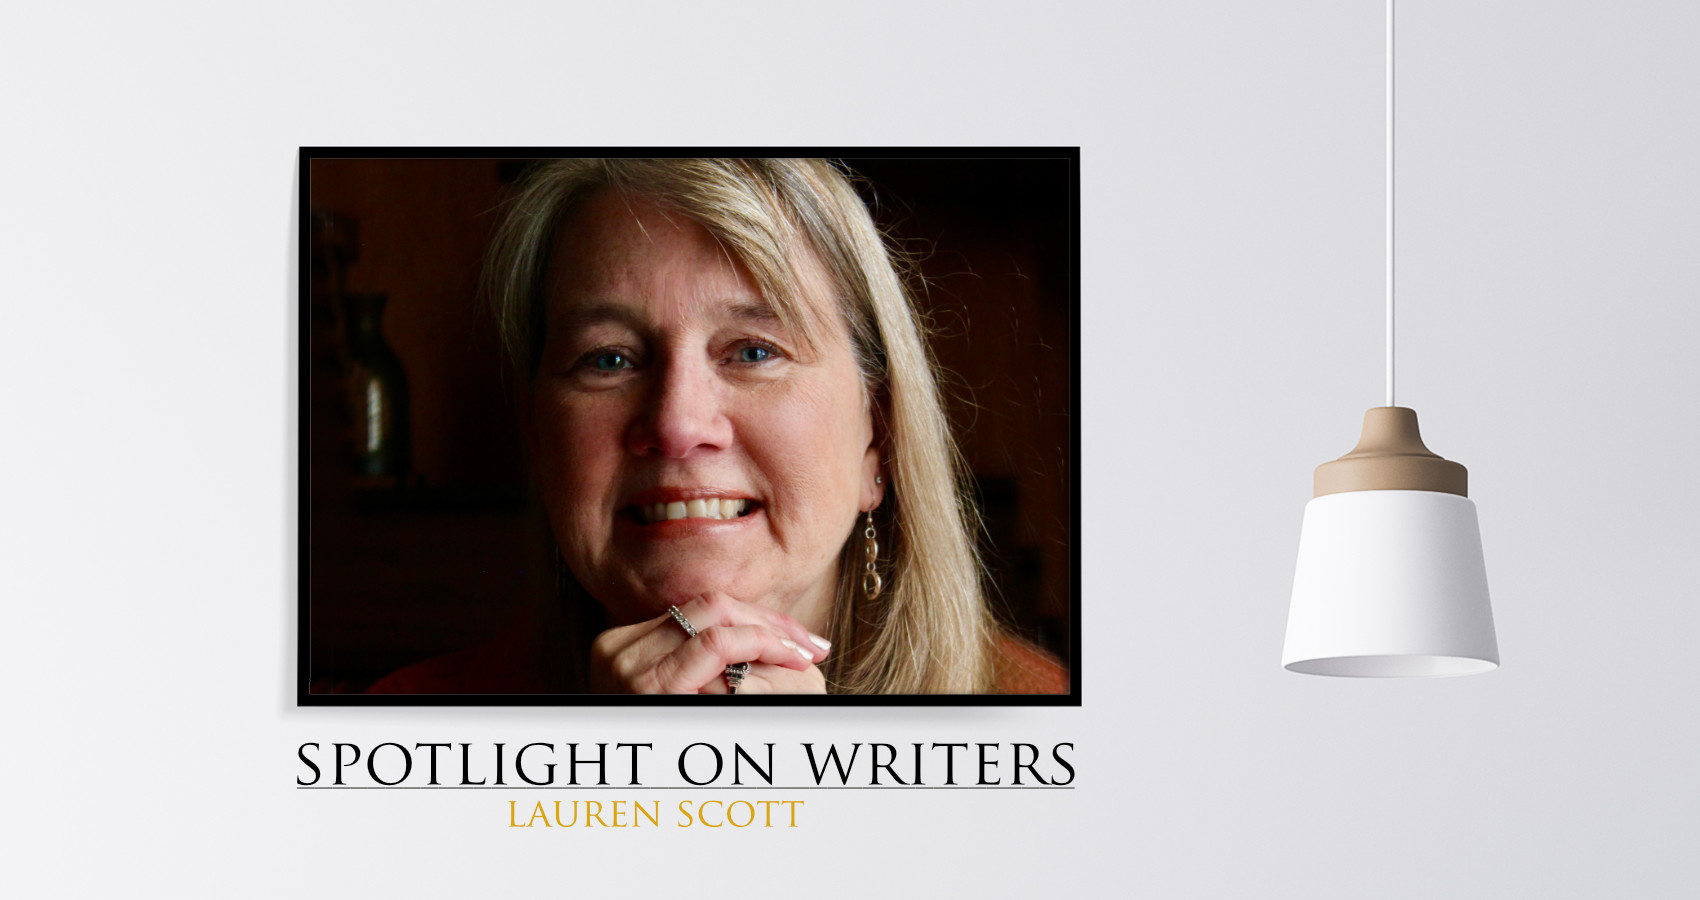 Spotlight On Writers - Lauren Scott, interview at Spillwords.com